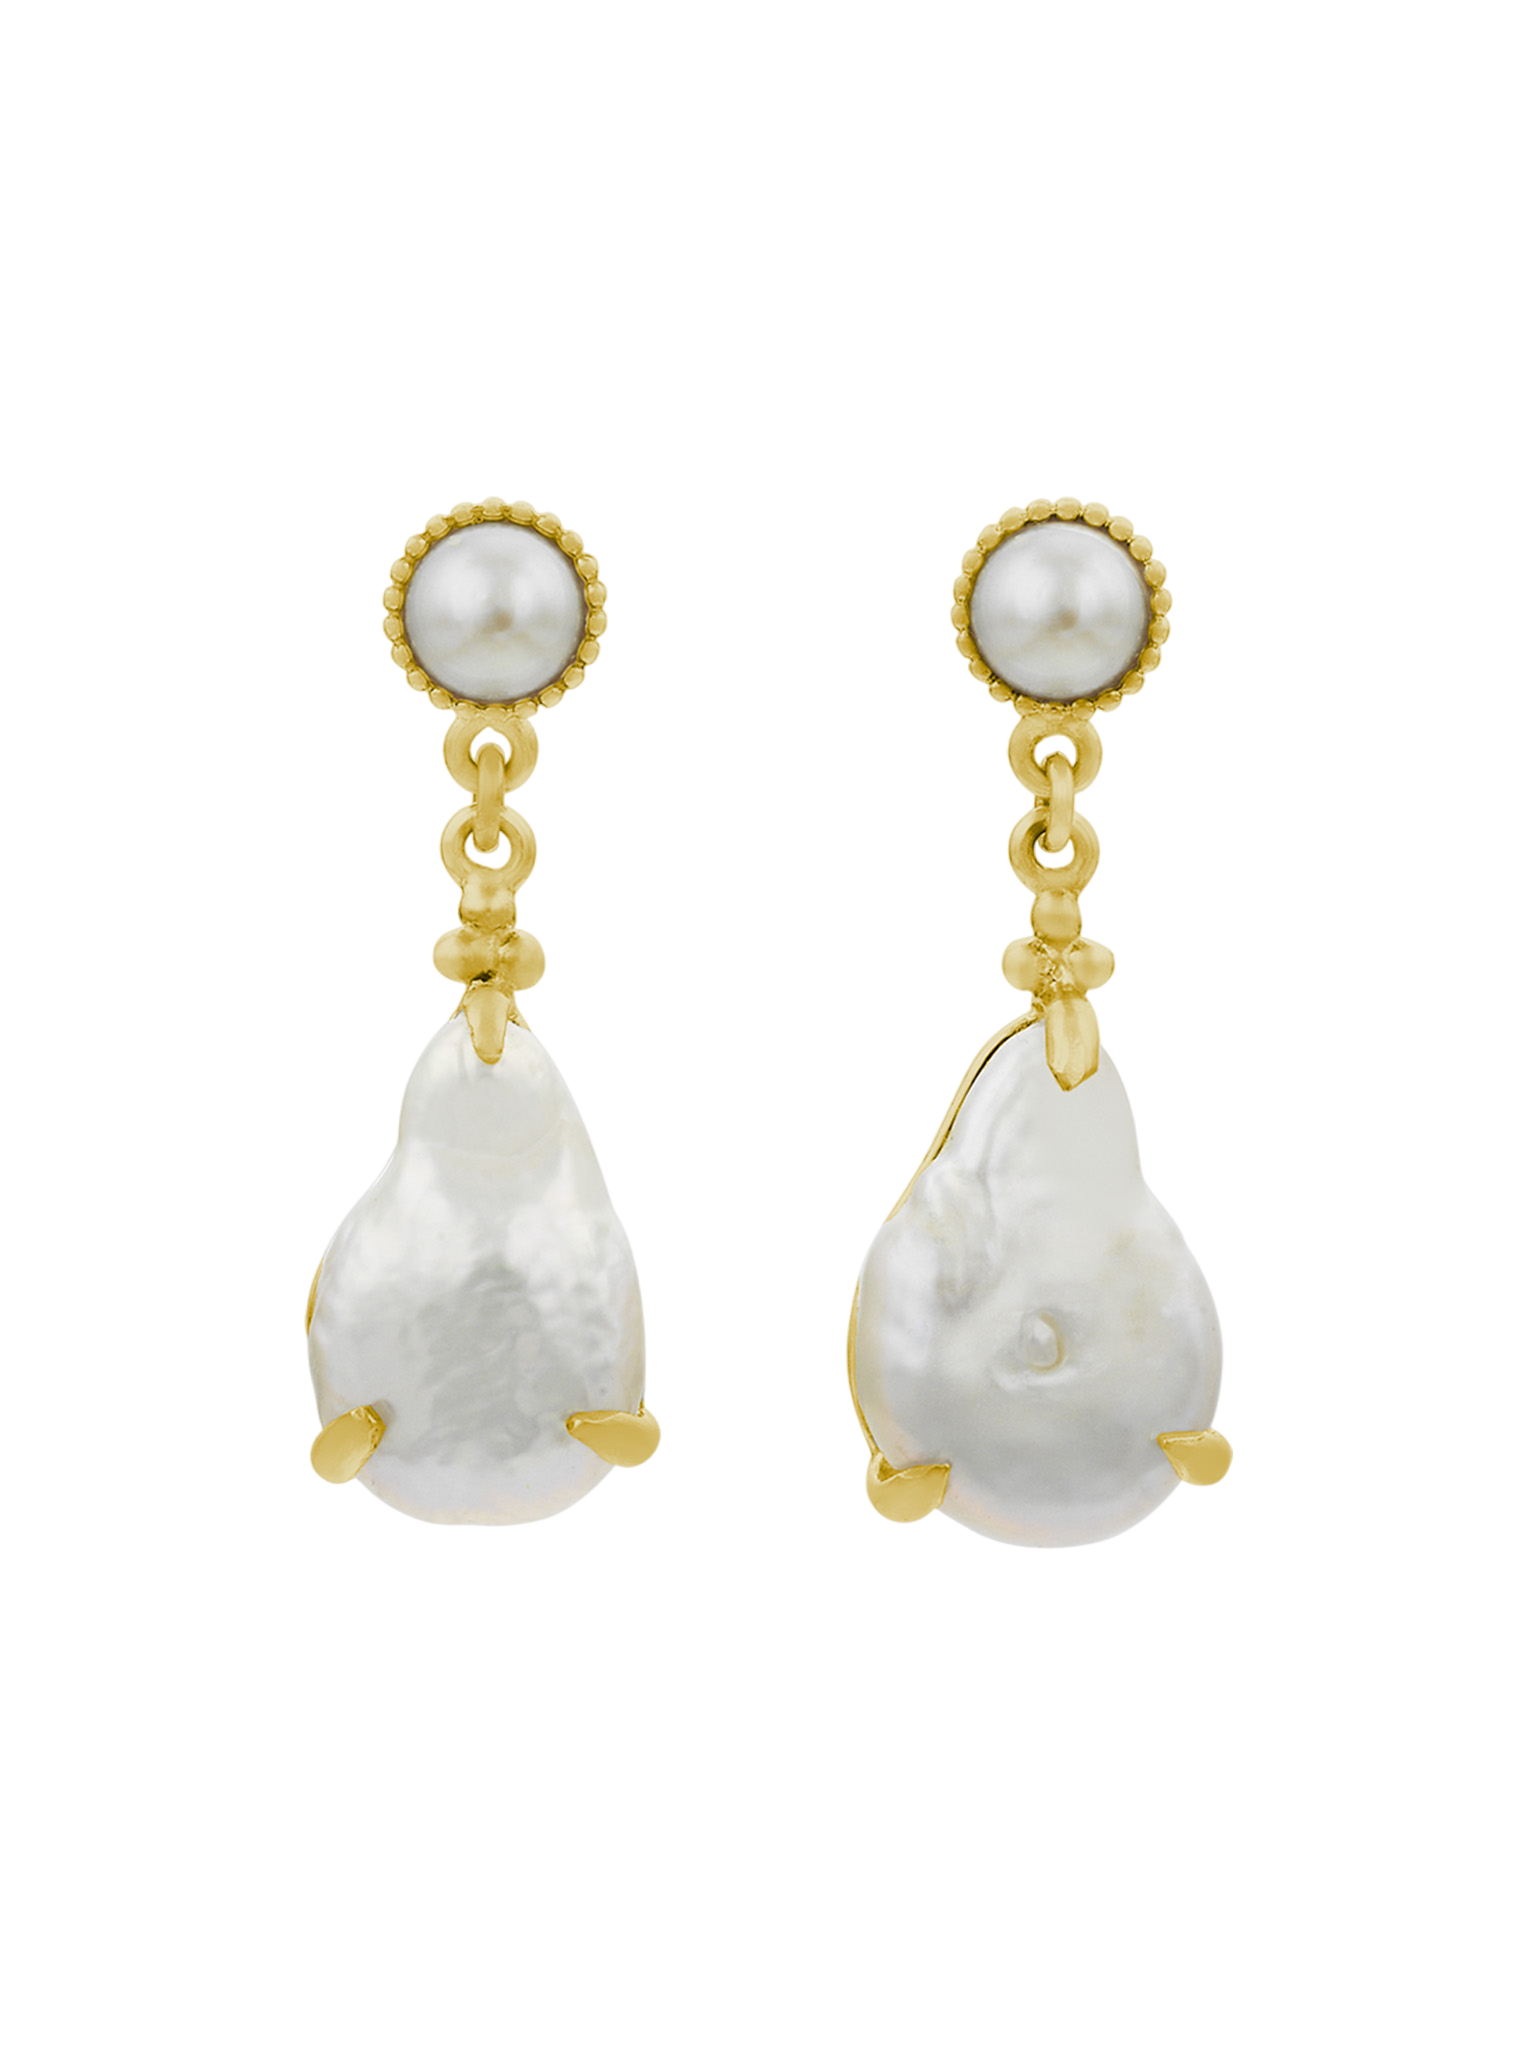 Keshi pearl earrings